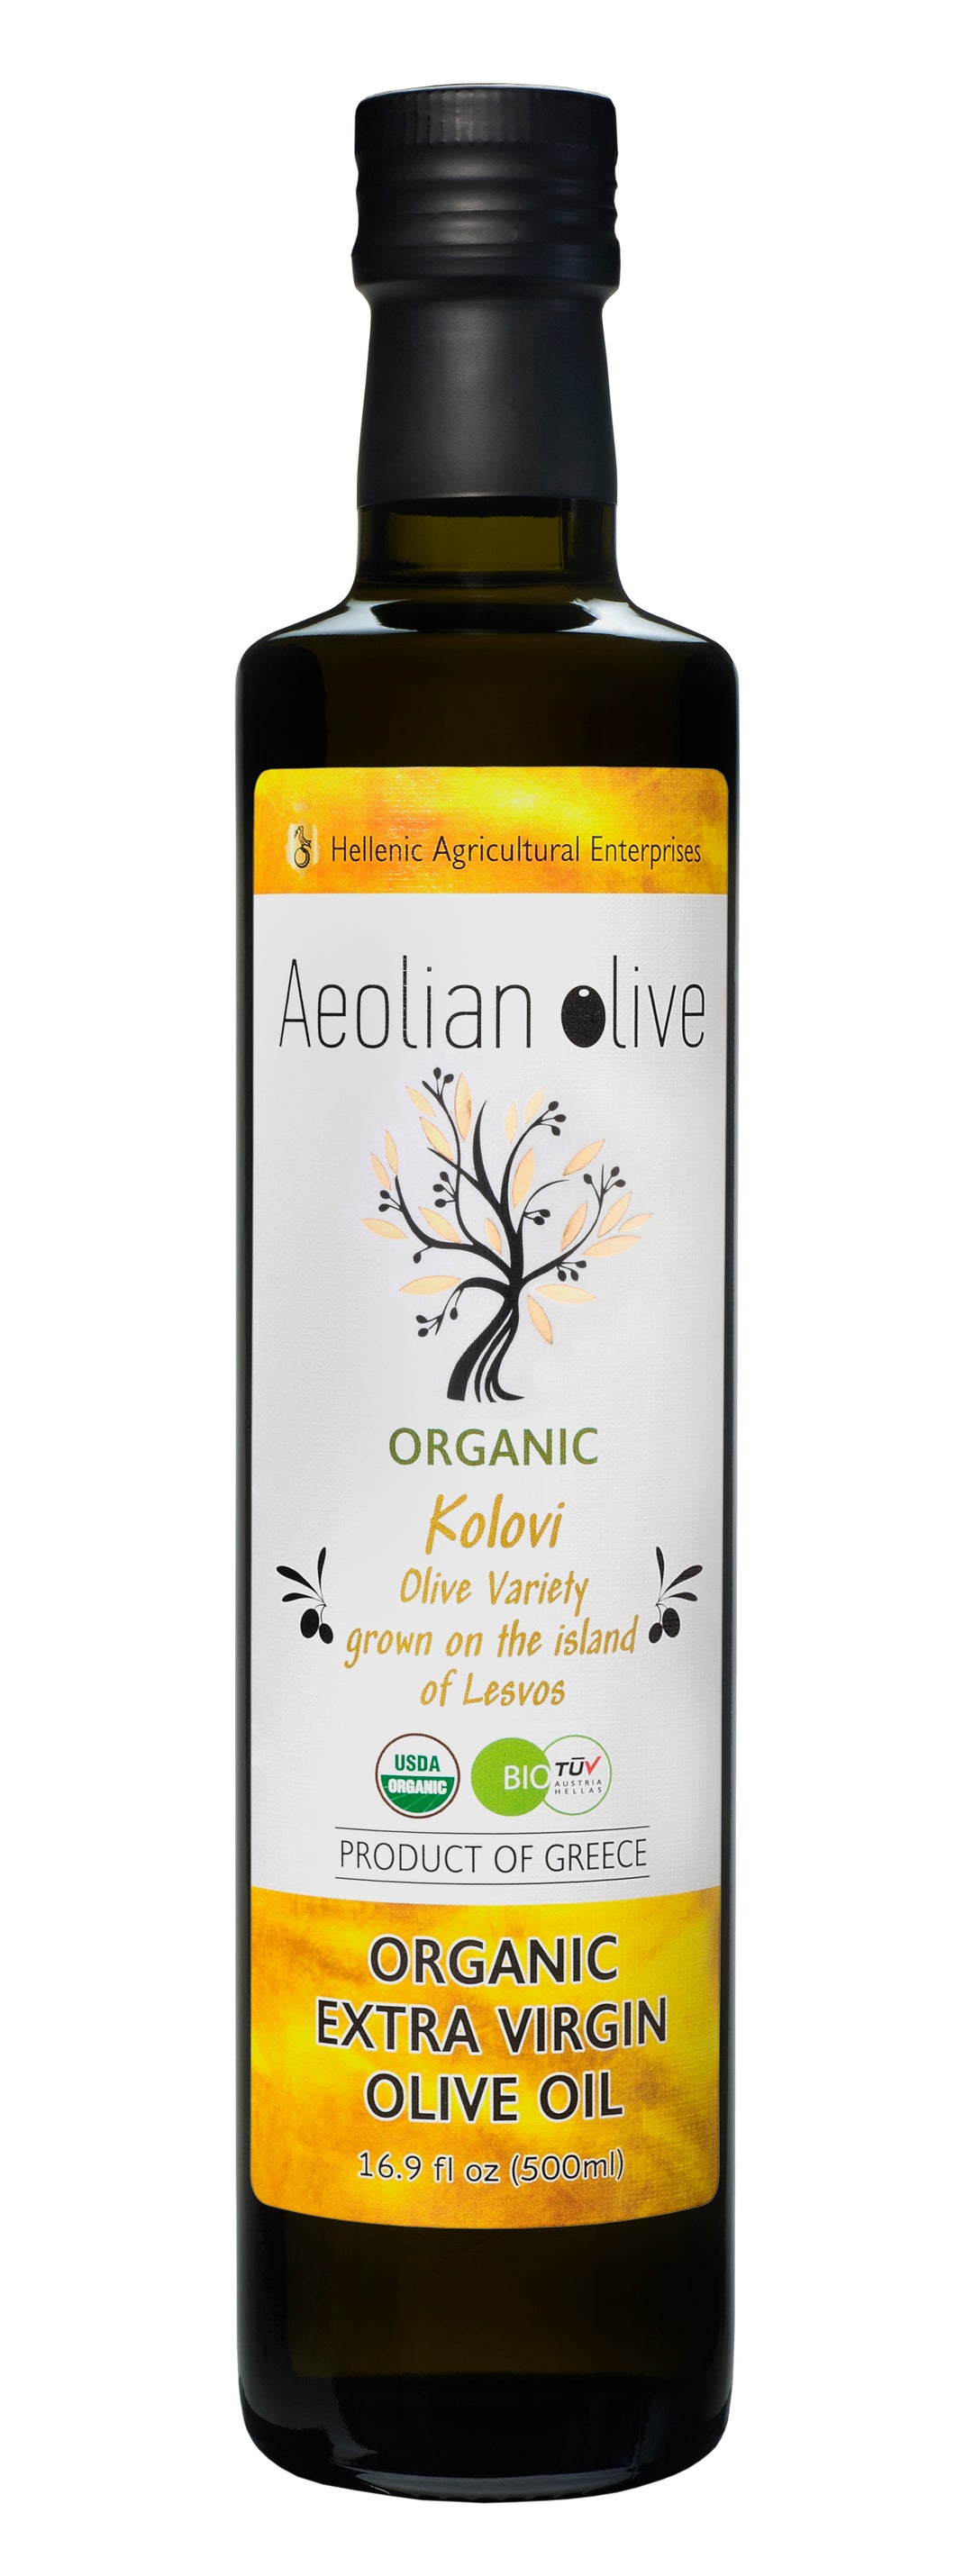 Aeolian Olive Organic Extra Virgin Olive Oil 16.9 fl oz (500ml)